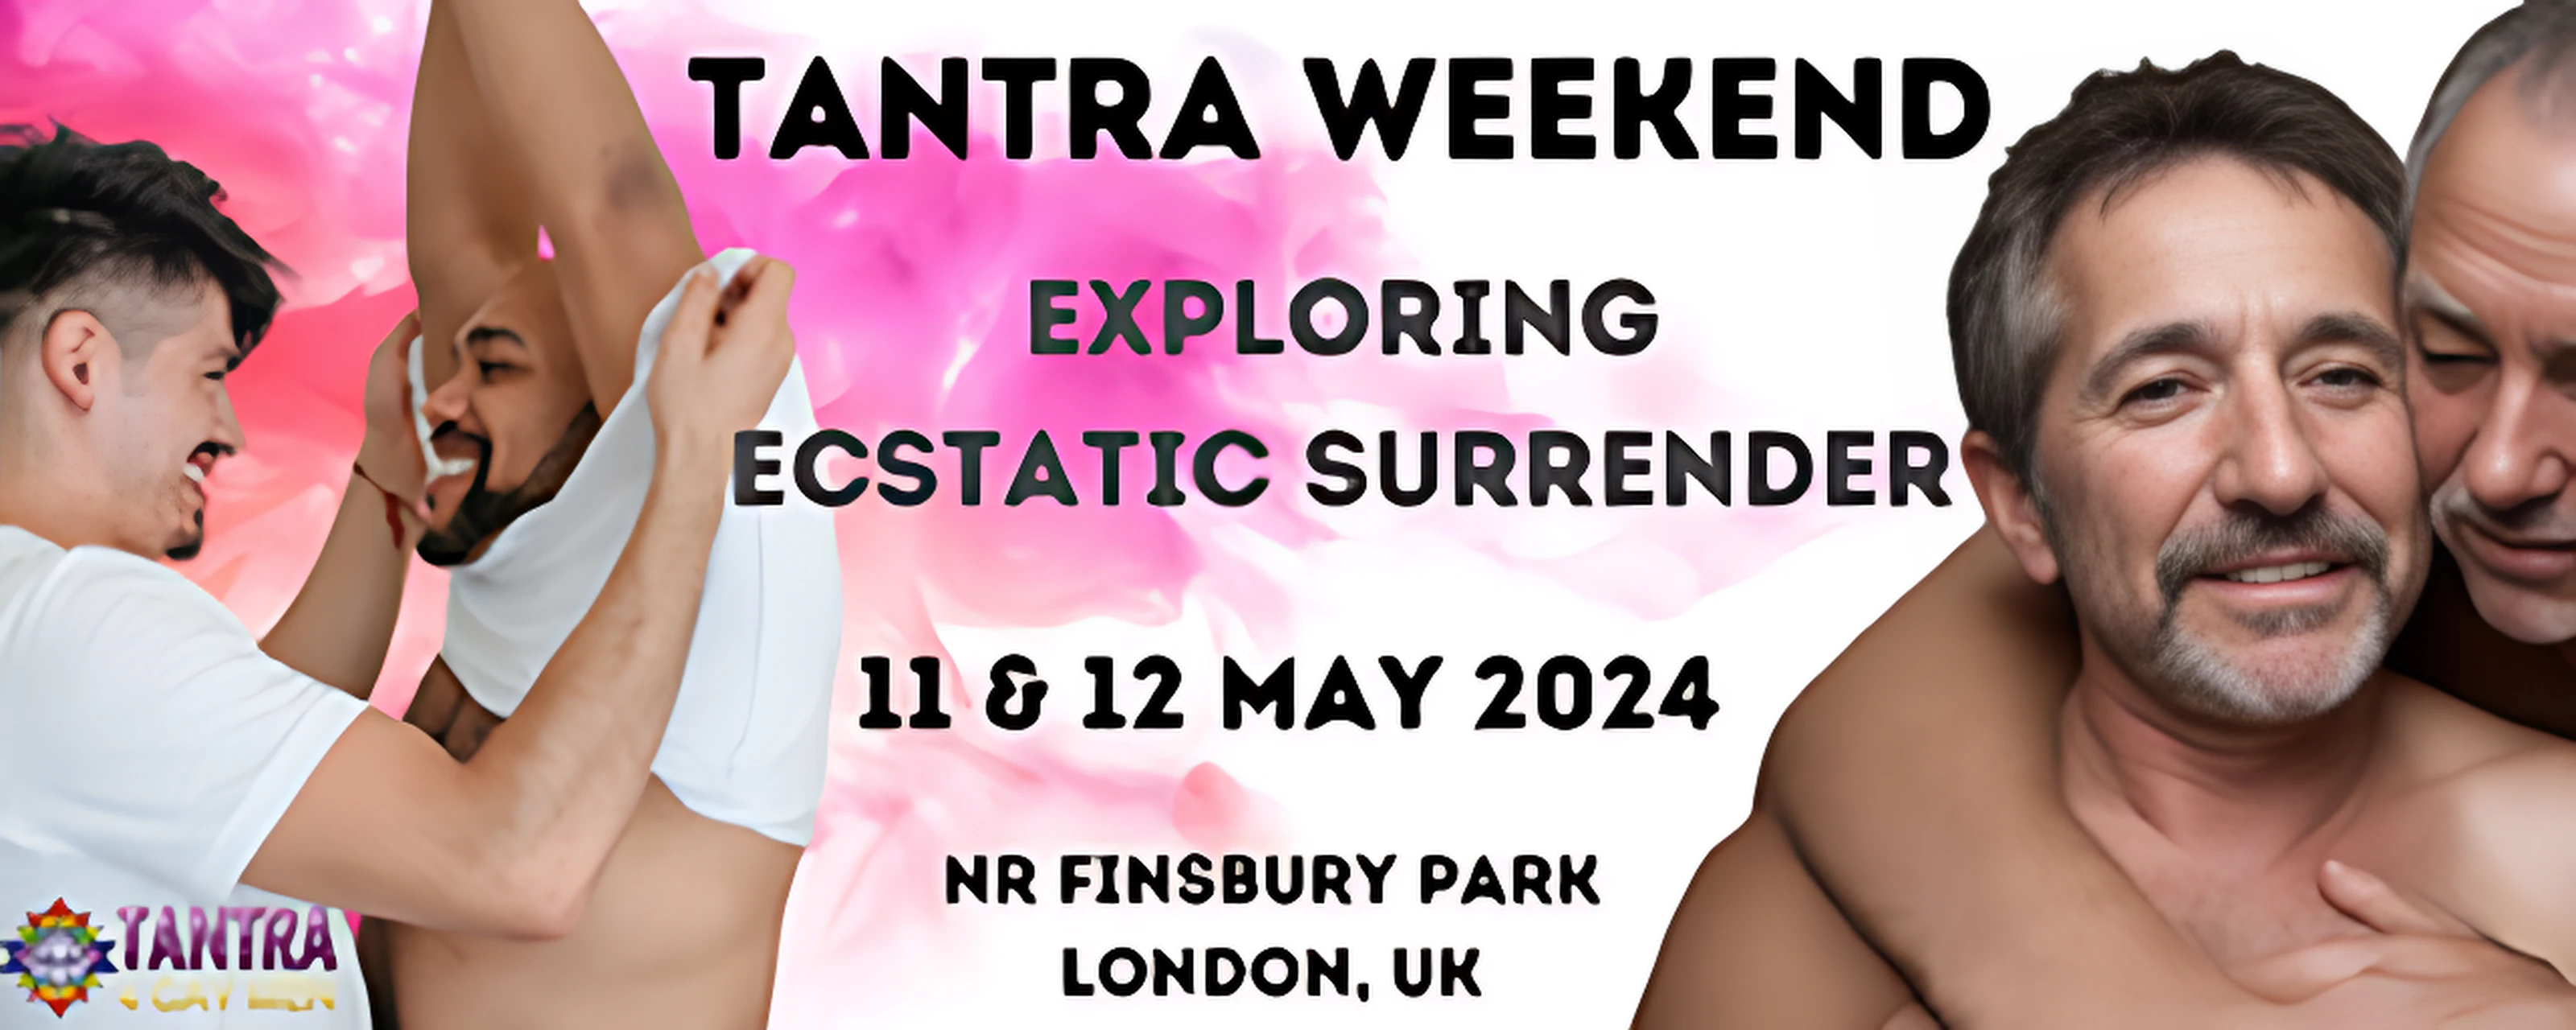 Tantra Weekend: Ecstatic Surrender